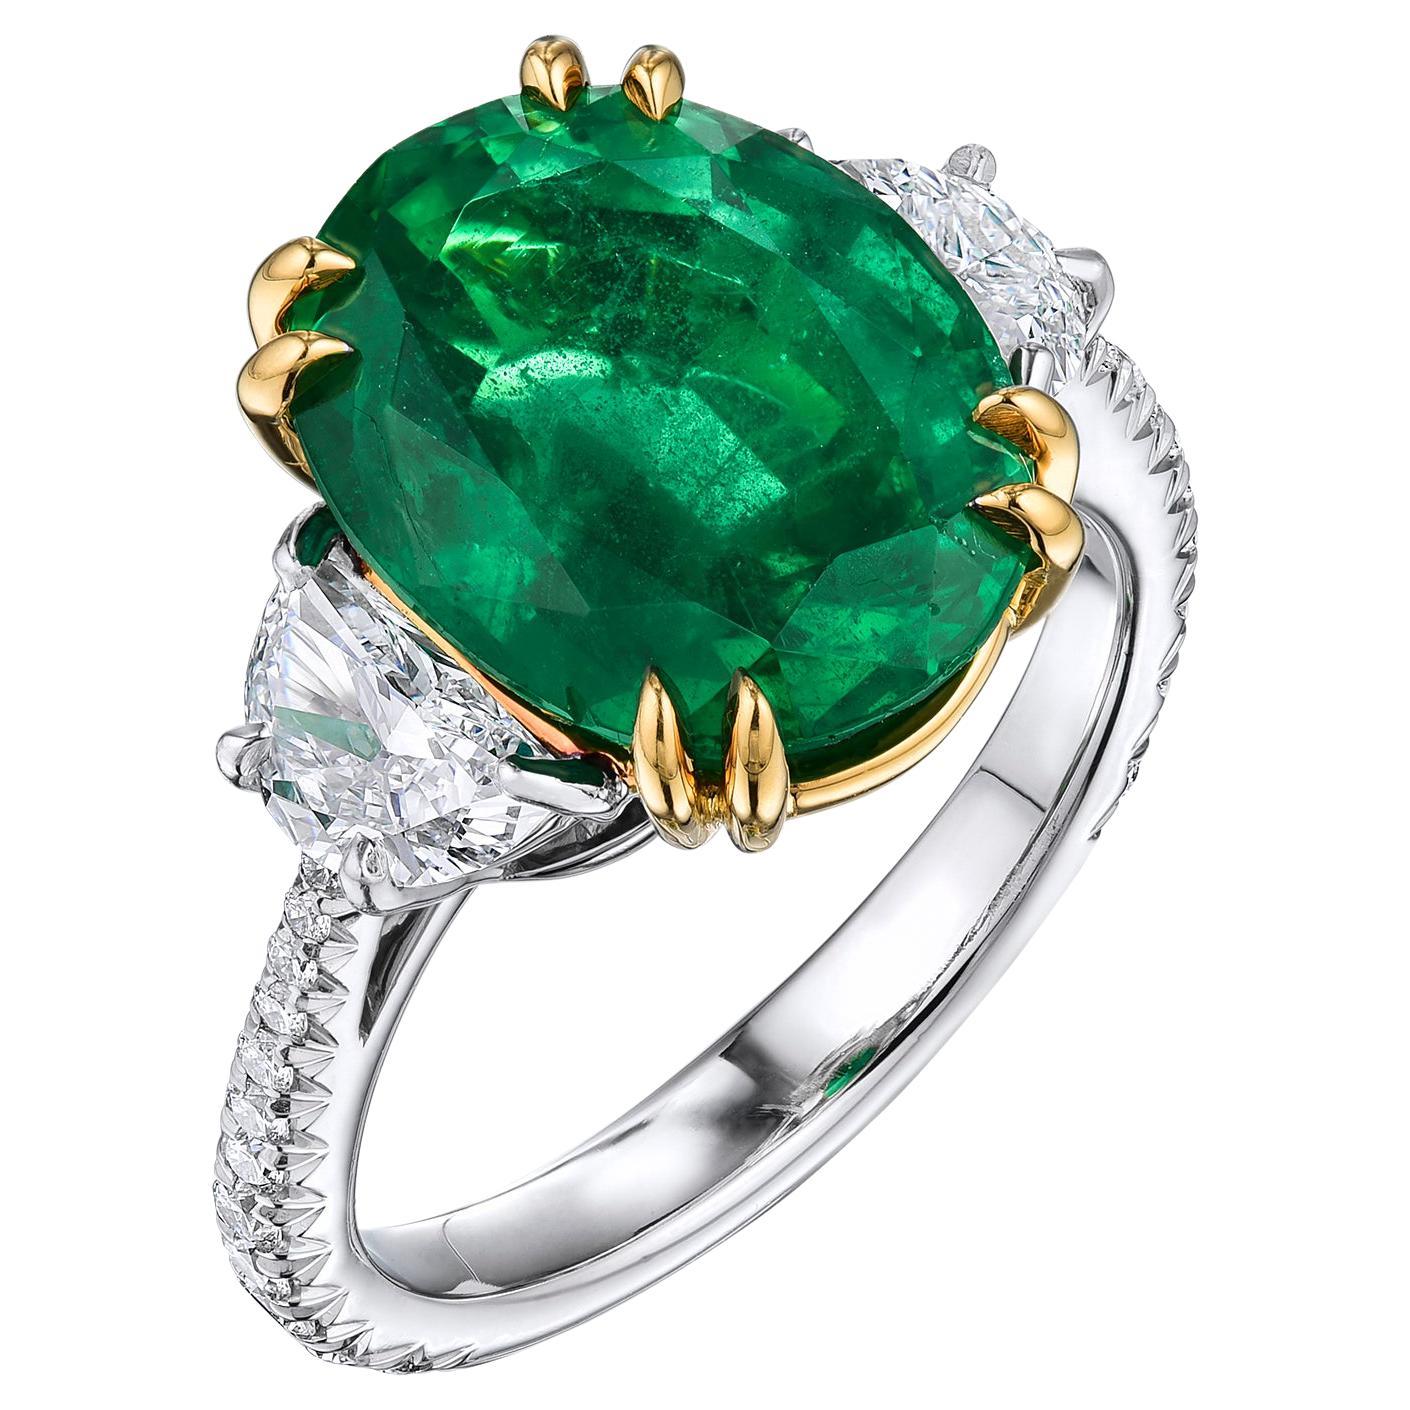 Oval 5.72 Carat Green Emerald Platinum Cocktail/Engagement Ring Set in Platinum For Sale